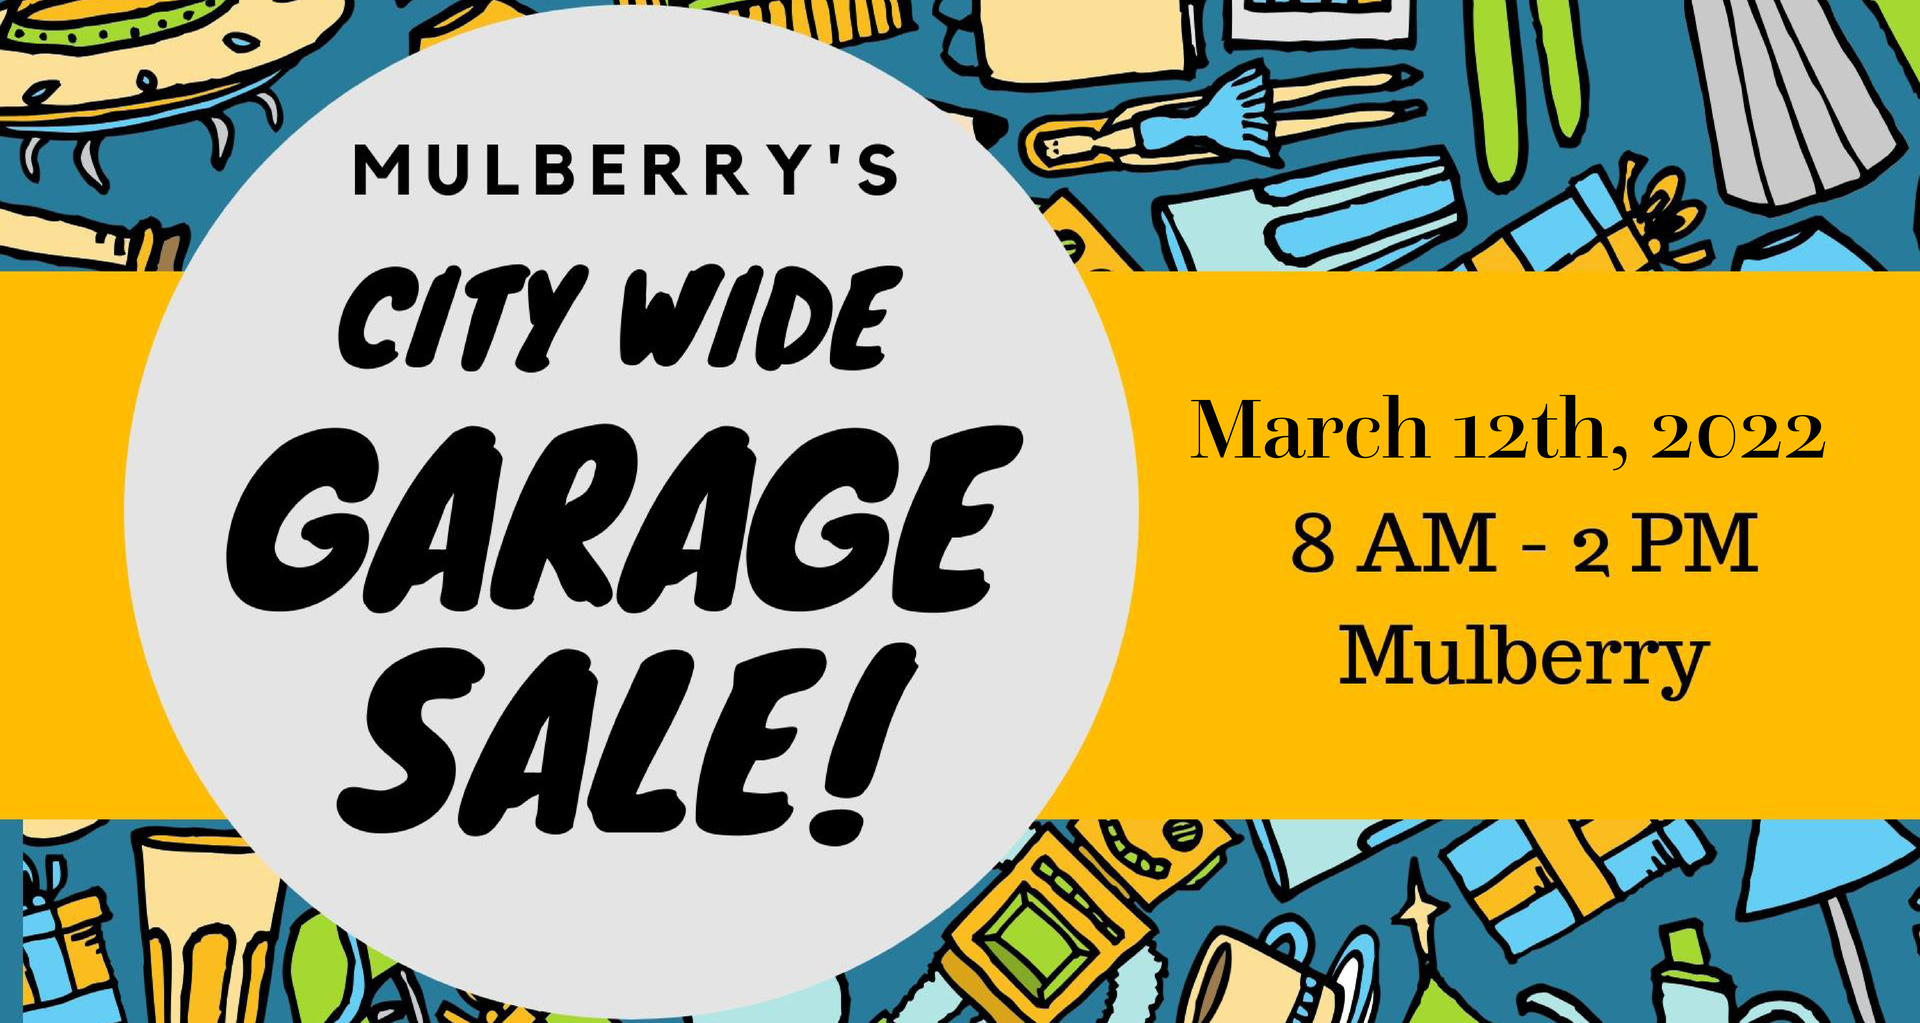 Mulberry's City Wide Garage Sale, Online Event